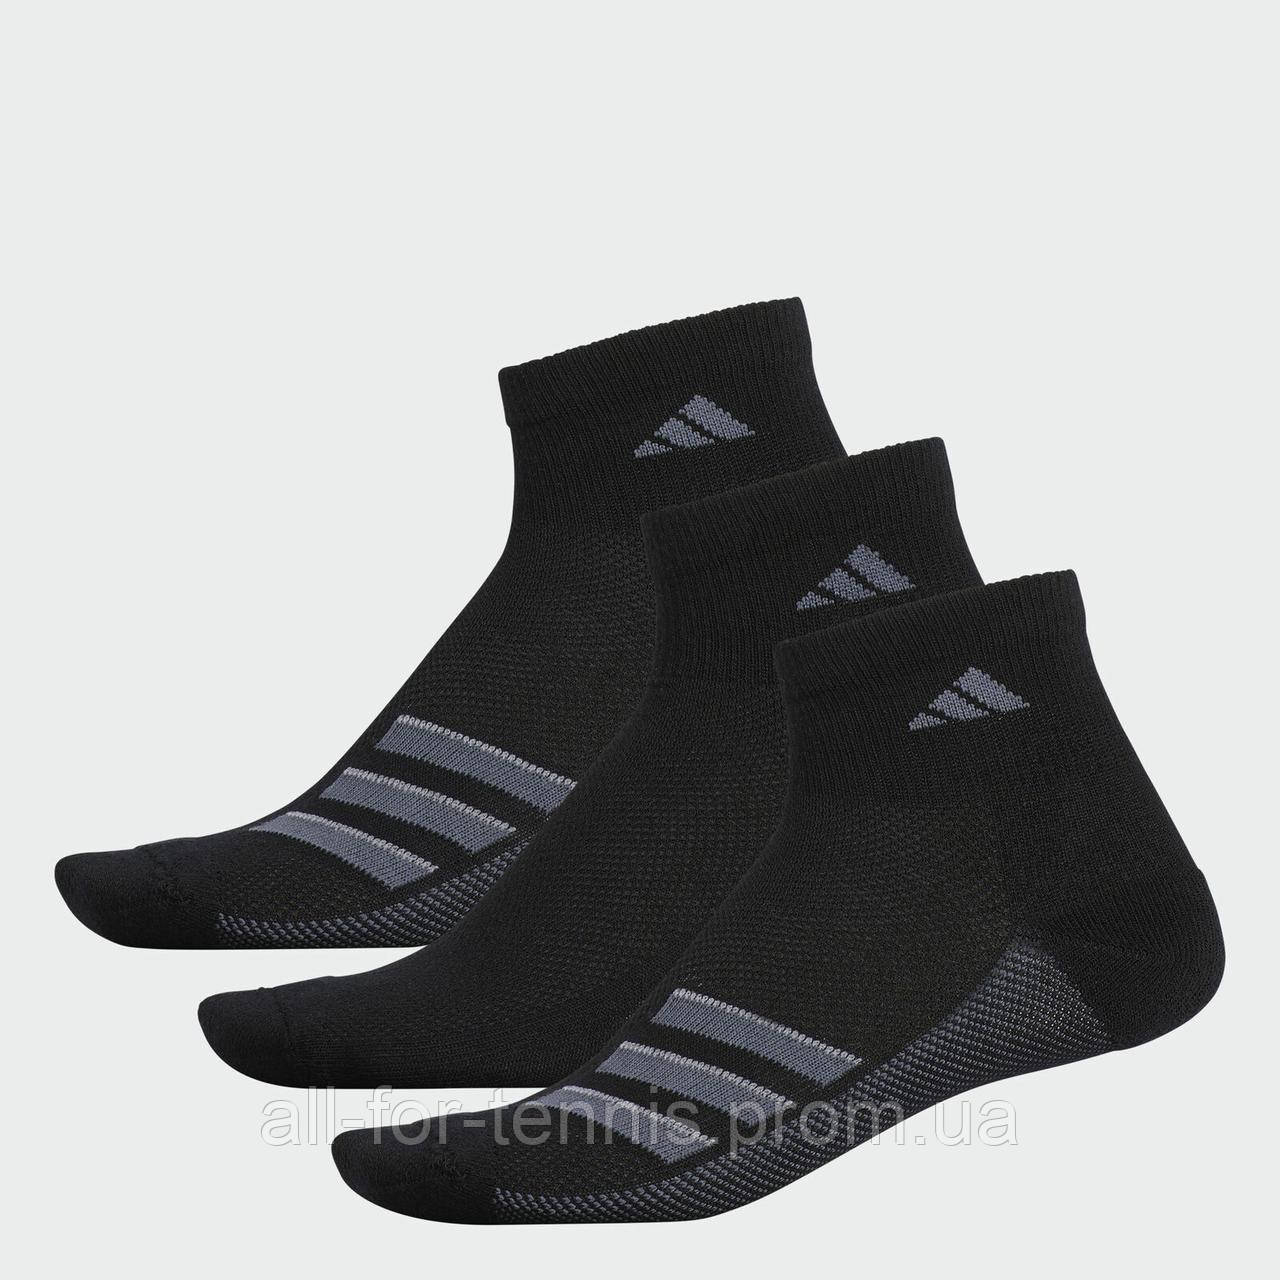 adidas climacool quarter socks black